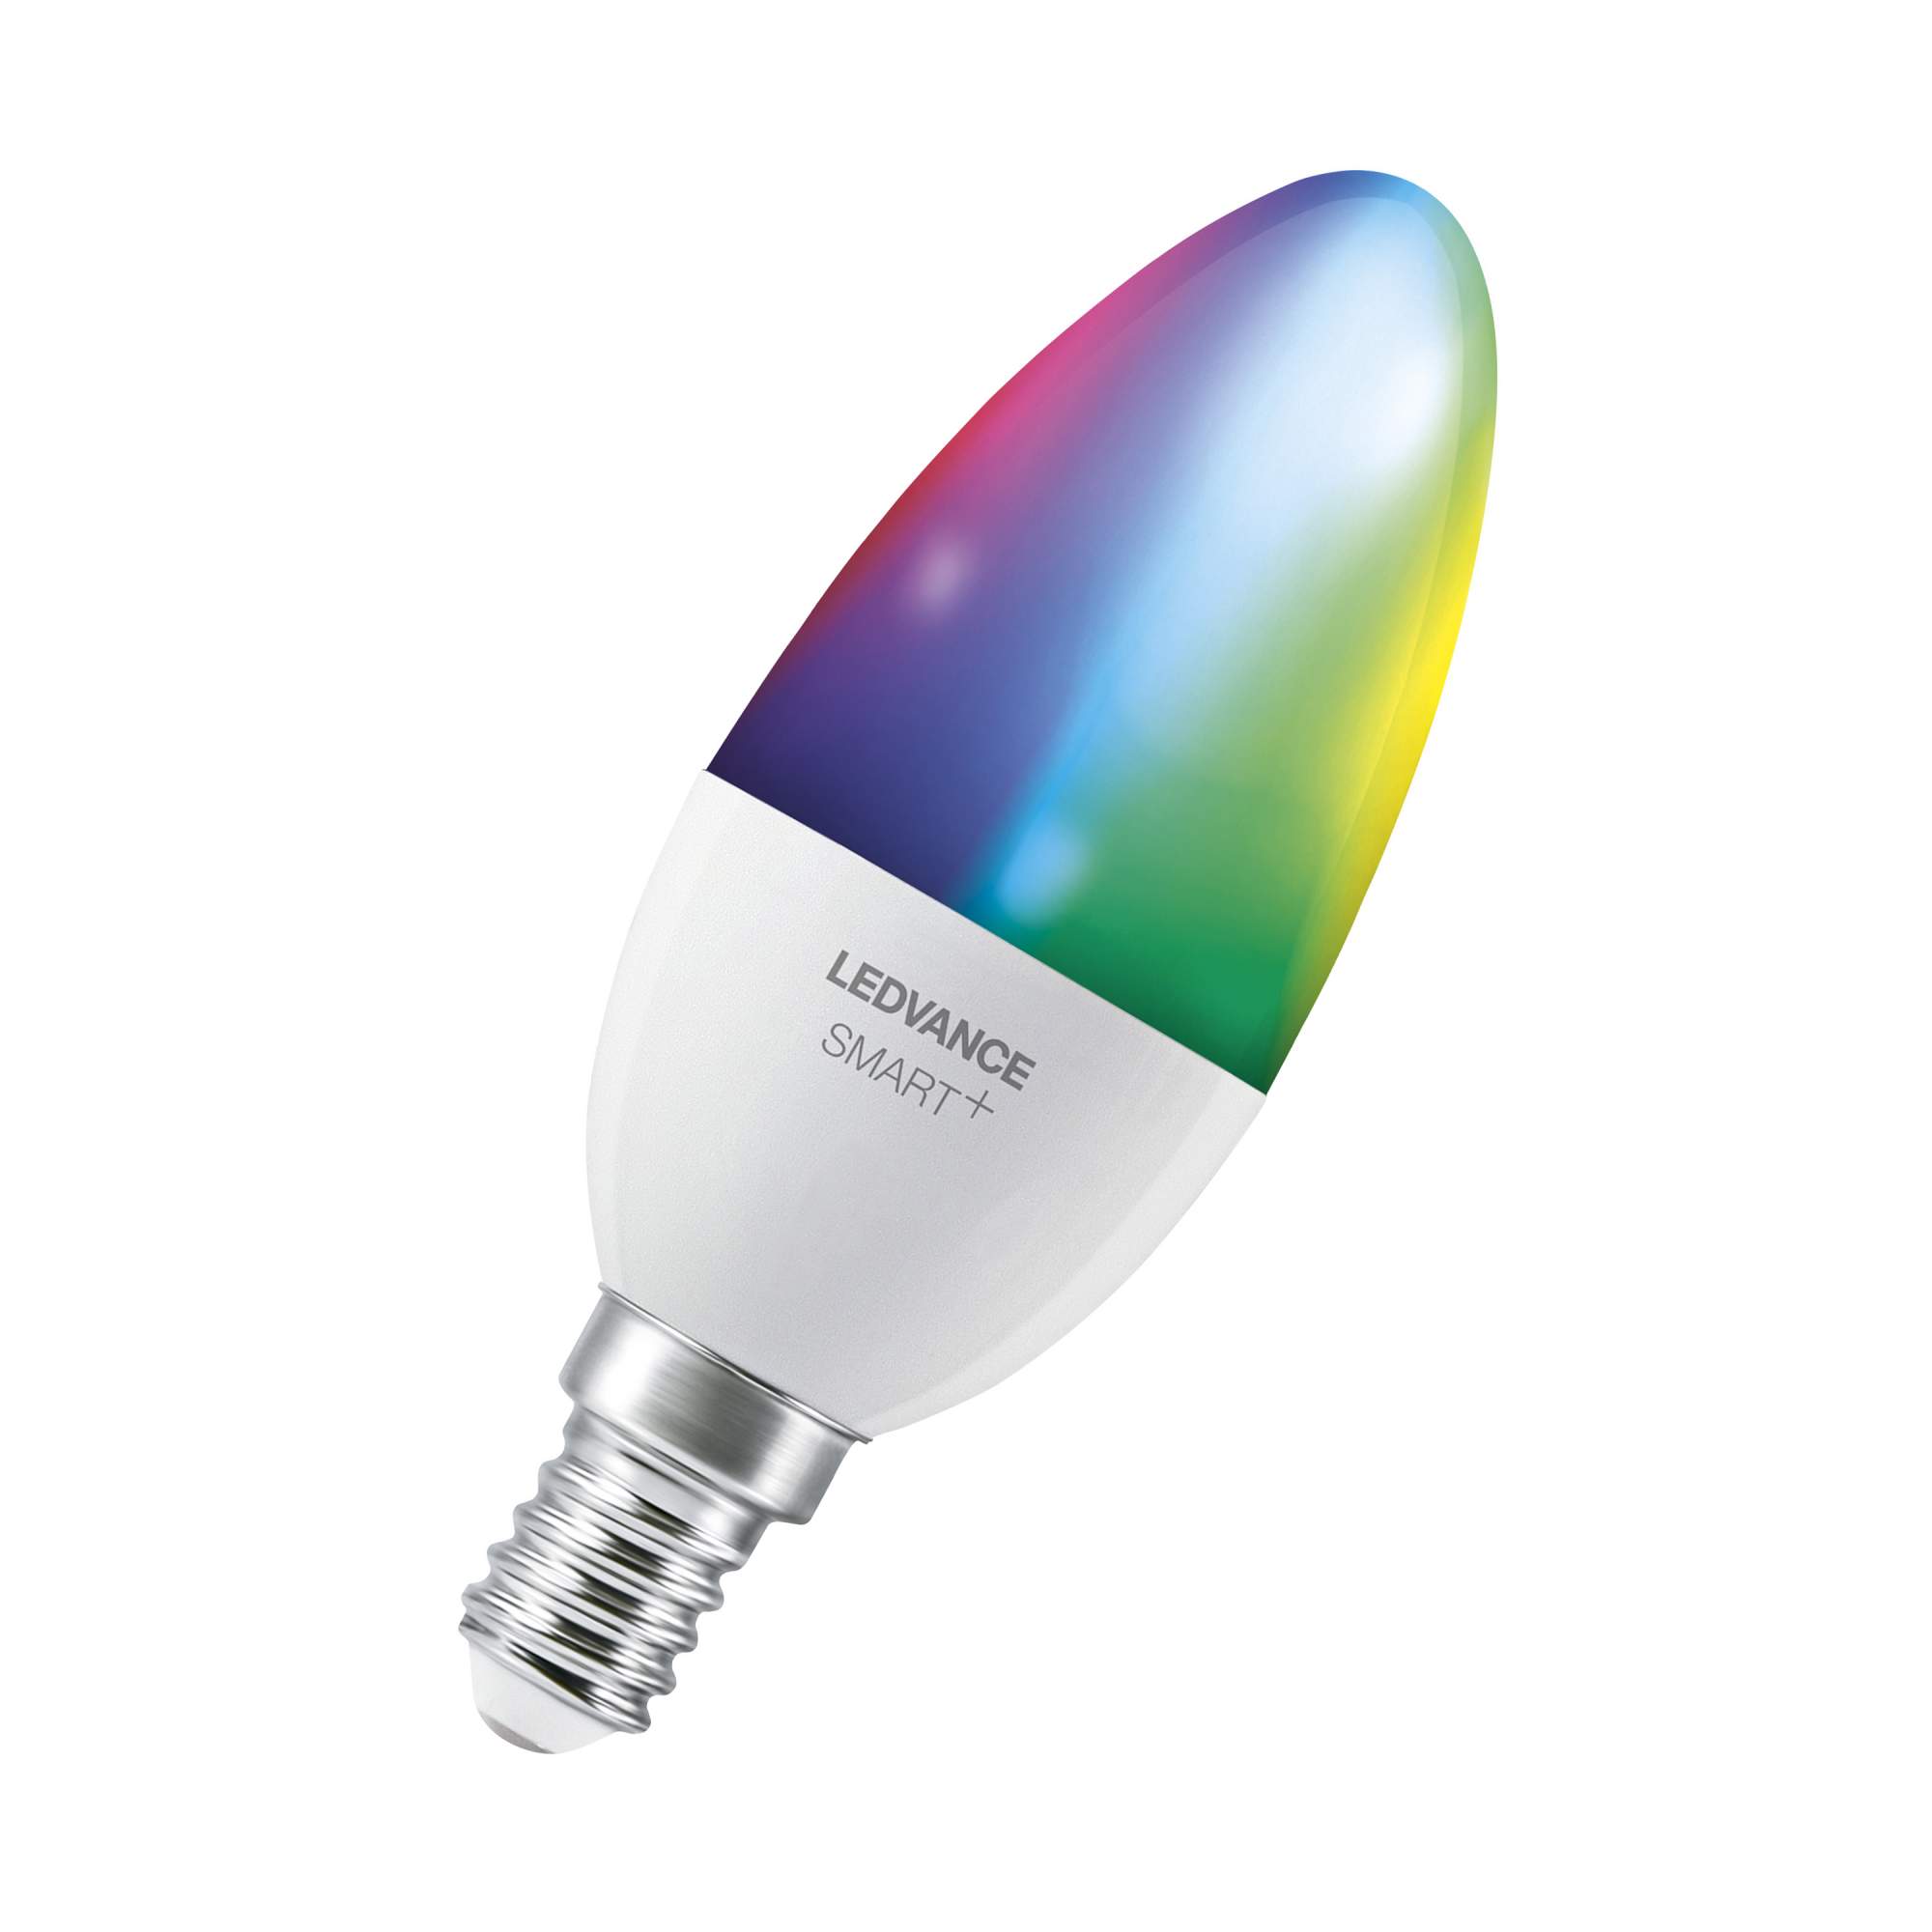 Набор ламп Ledvance SMART+ WiFi Candle Multicolour 40 5 W/2700…6500K E14 Wi-Fi Яндекс 3шт